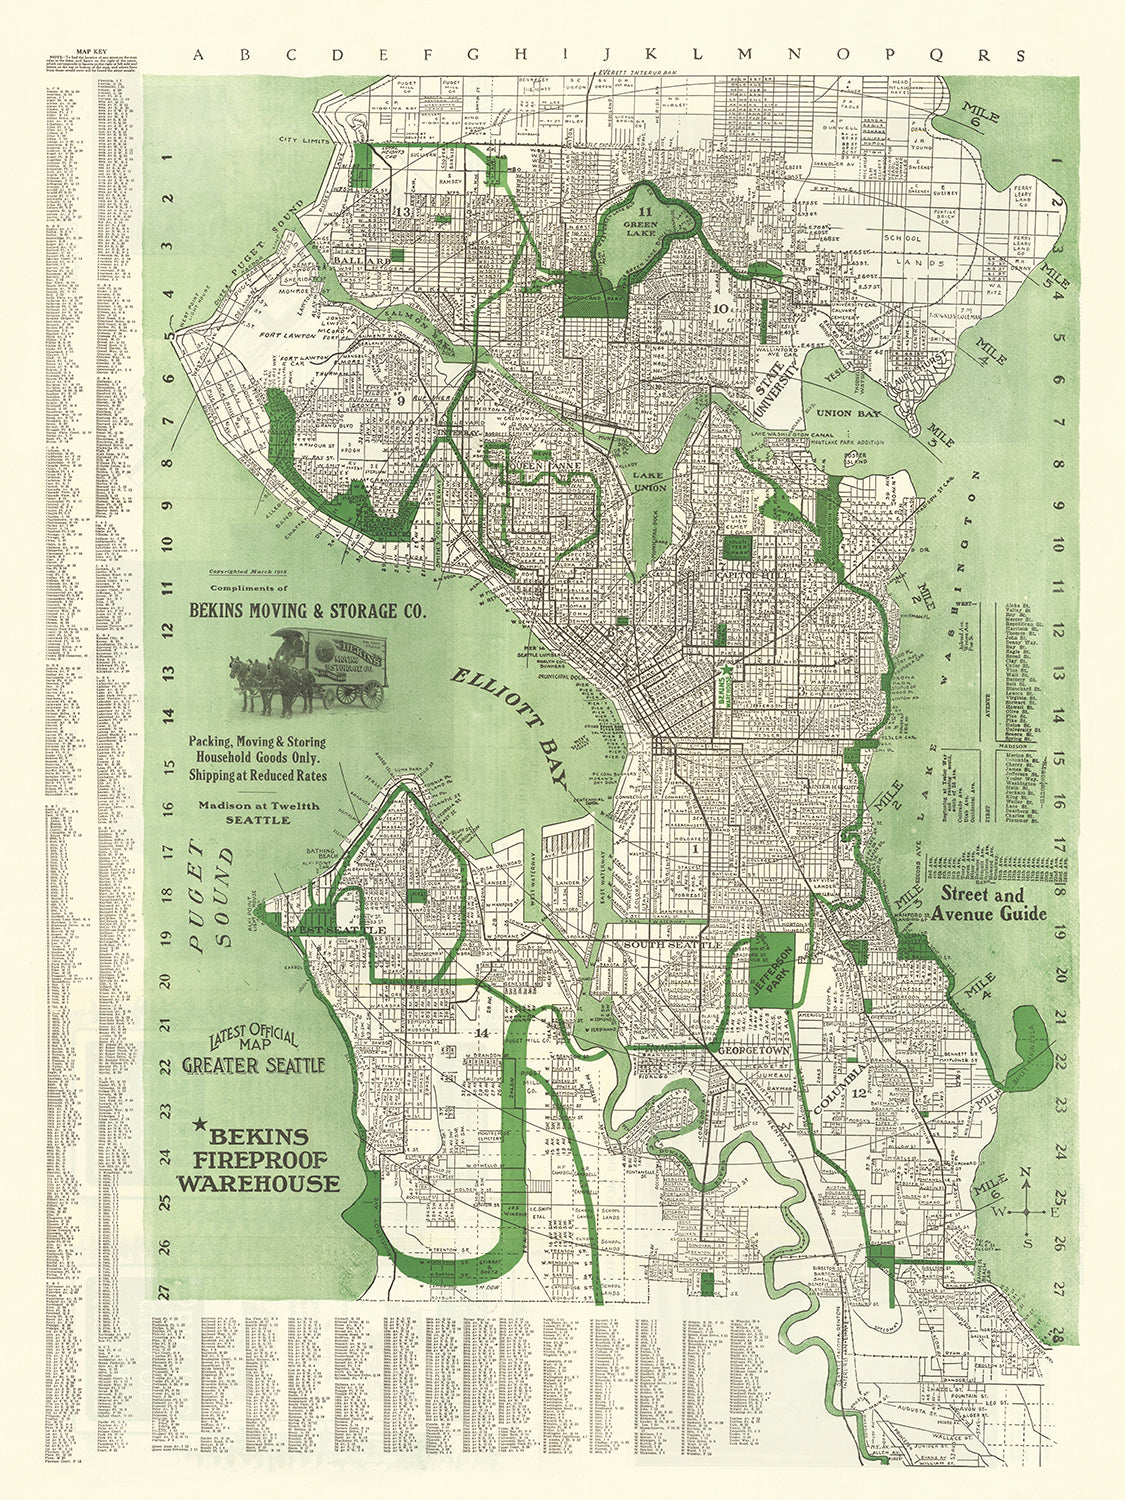 Old Map of Seattle, 1913: Pike Place Market, University of Washington, Green Lake, Lake Washington, Smith Tower